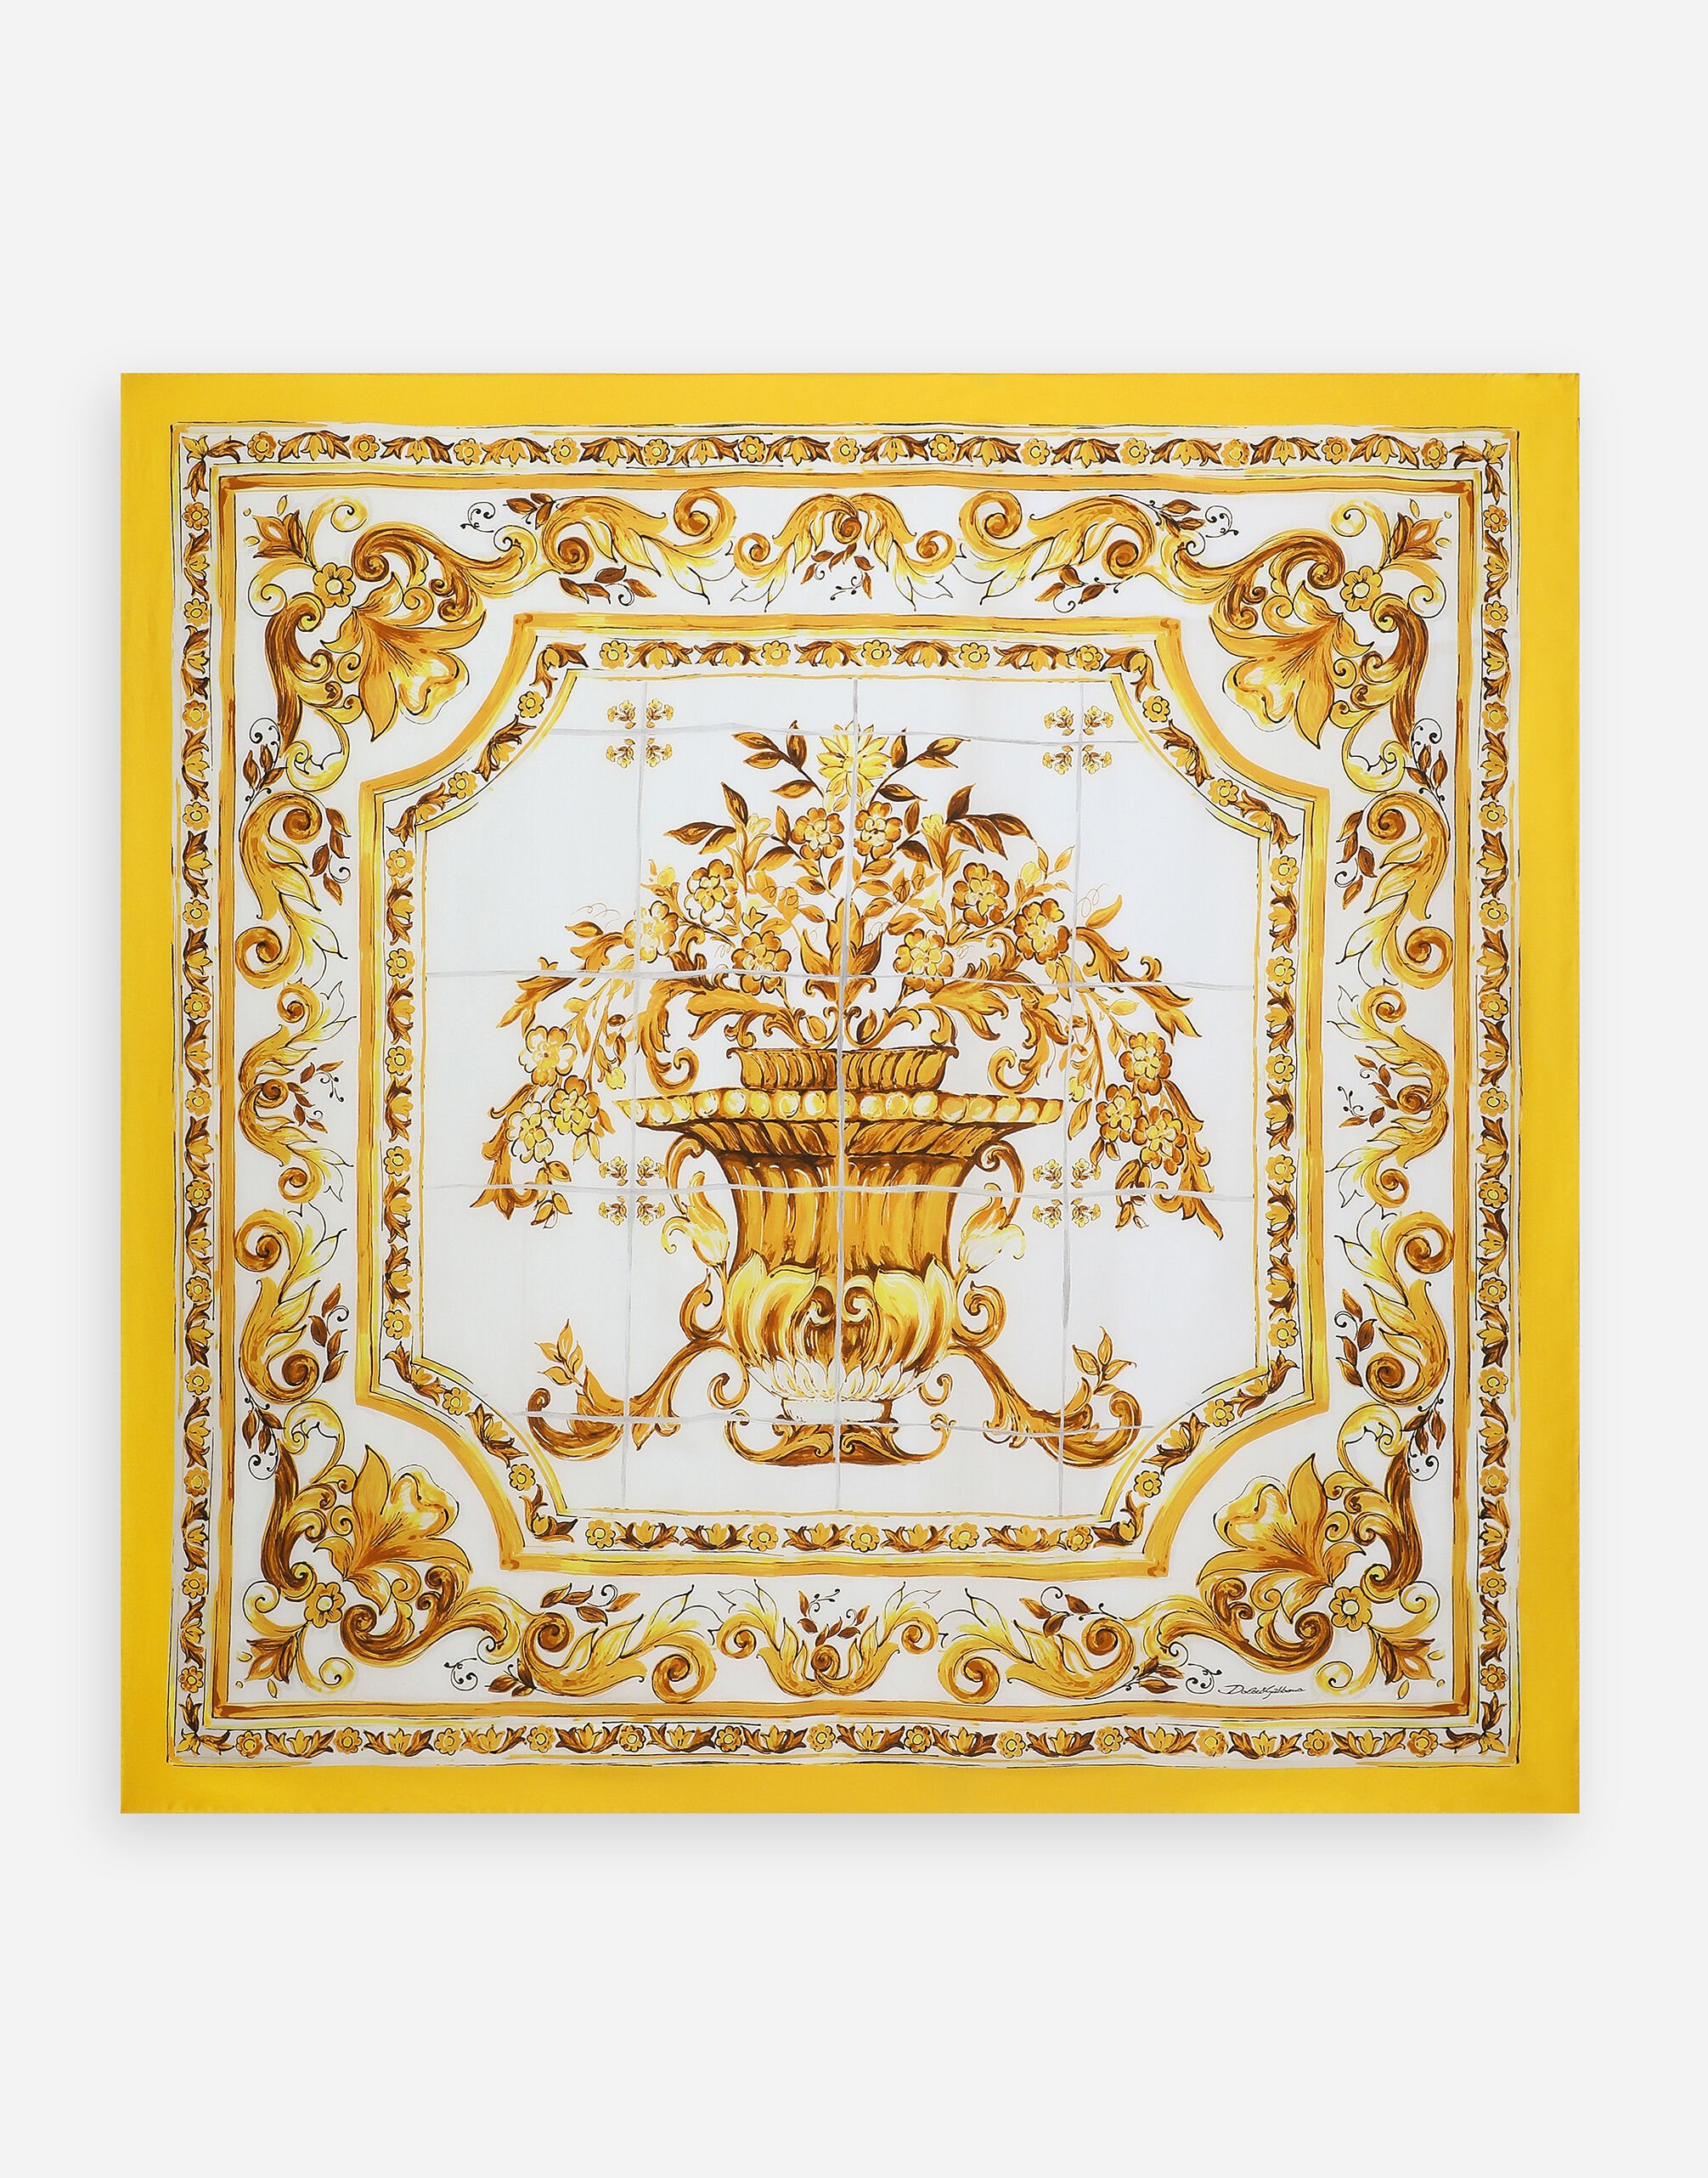 Dolce & Gabbana マヨリカプリント シルクツイル ラージスカーフ (140x140) プリ FS215AGDAOY